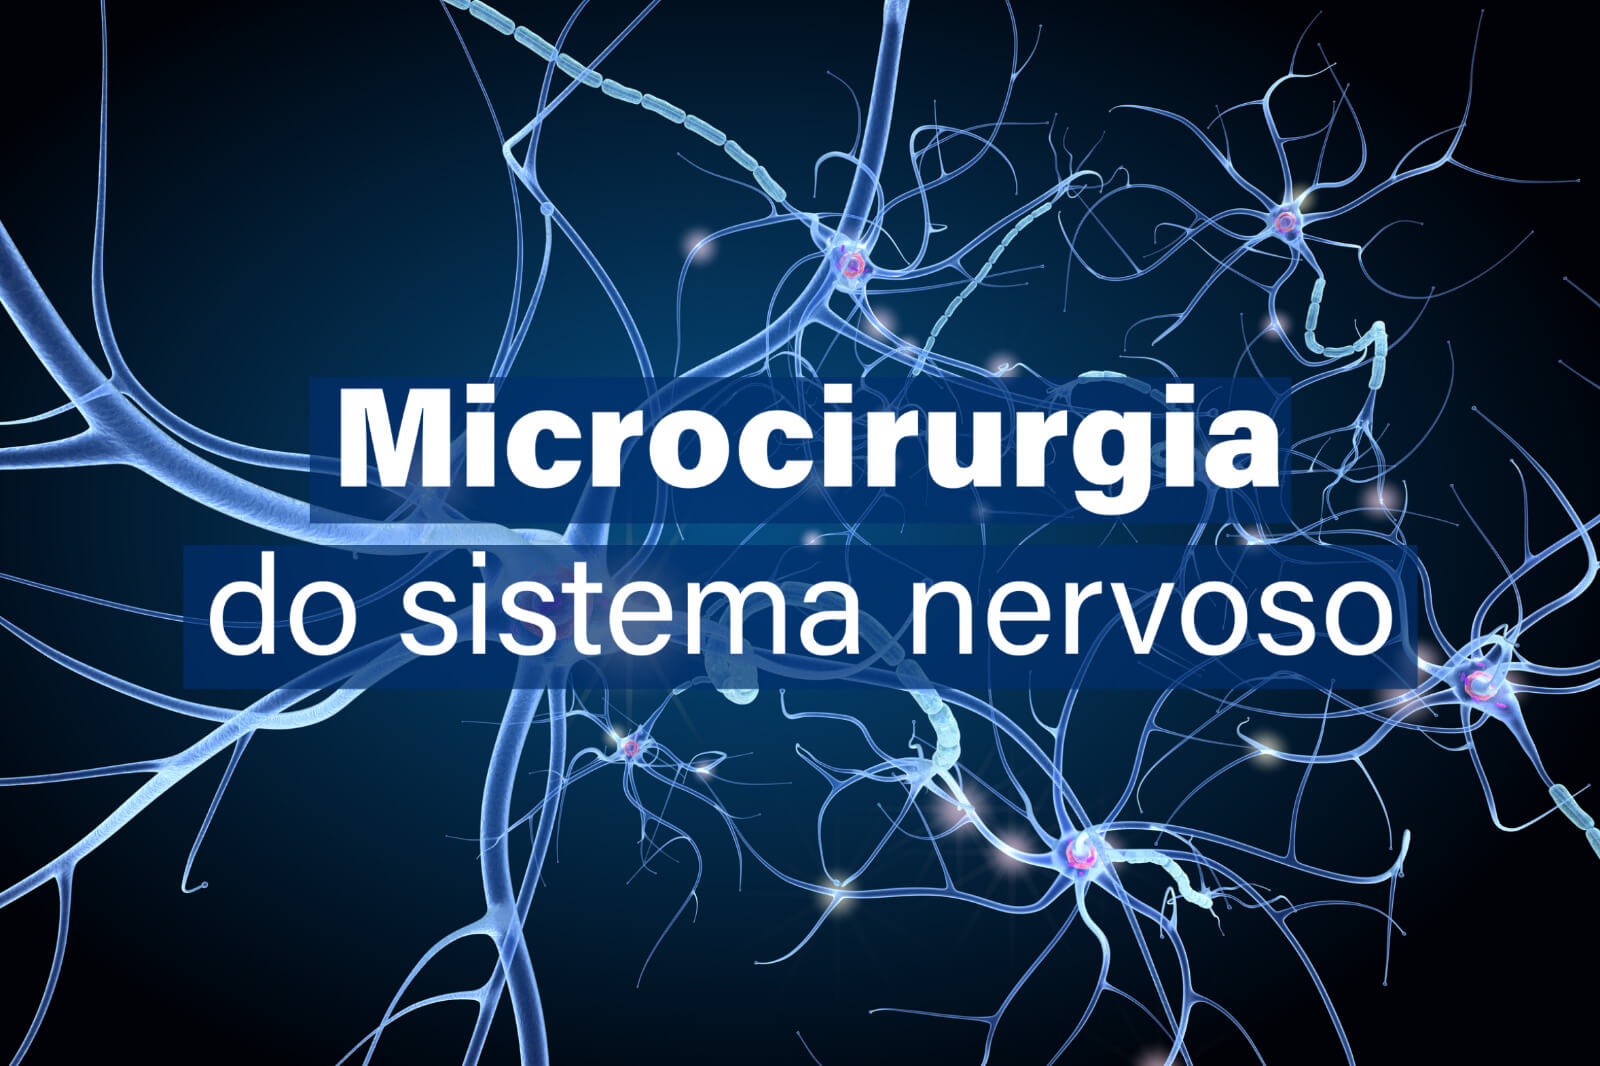 Microcirurgia do sistema nervoso